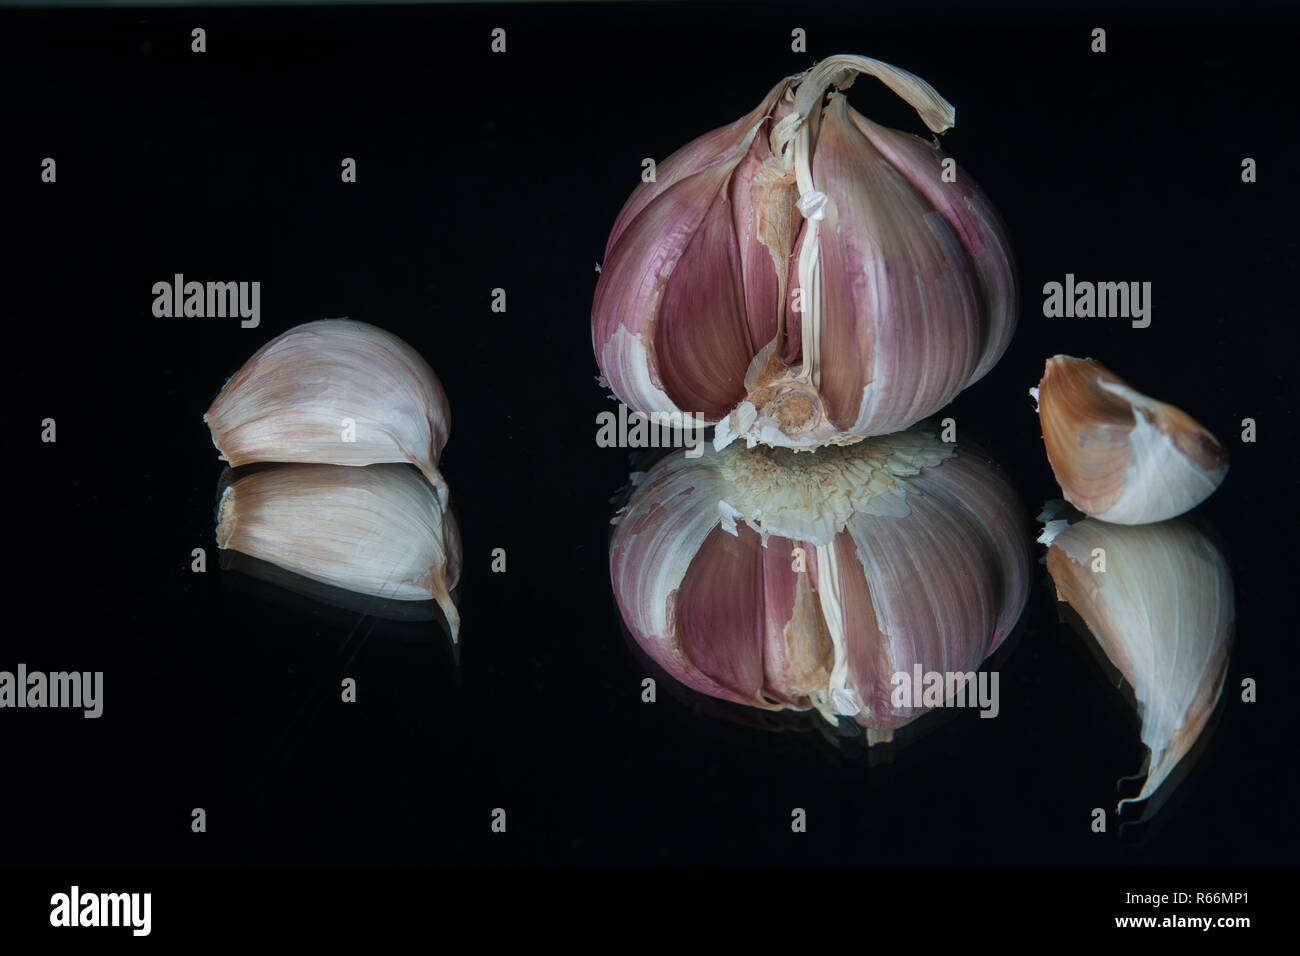 garlic varaitionen Stock Photo